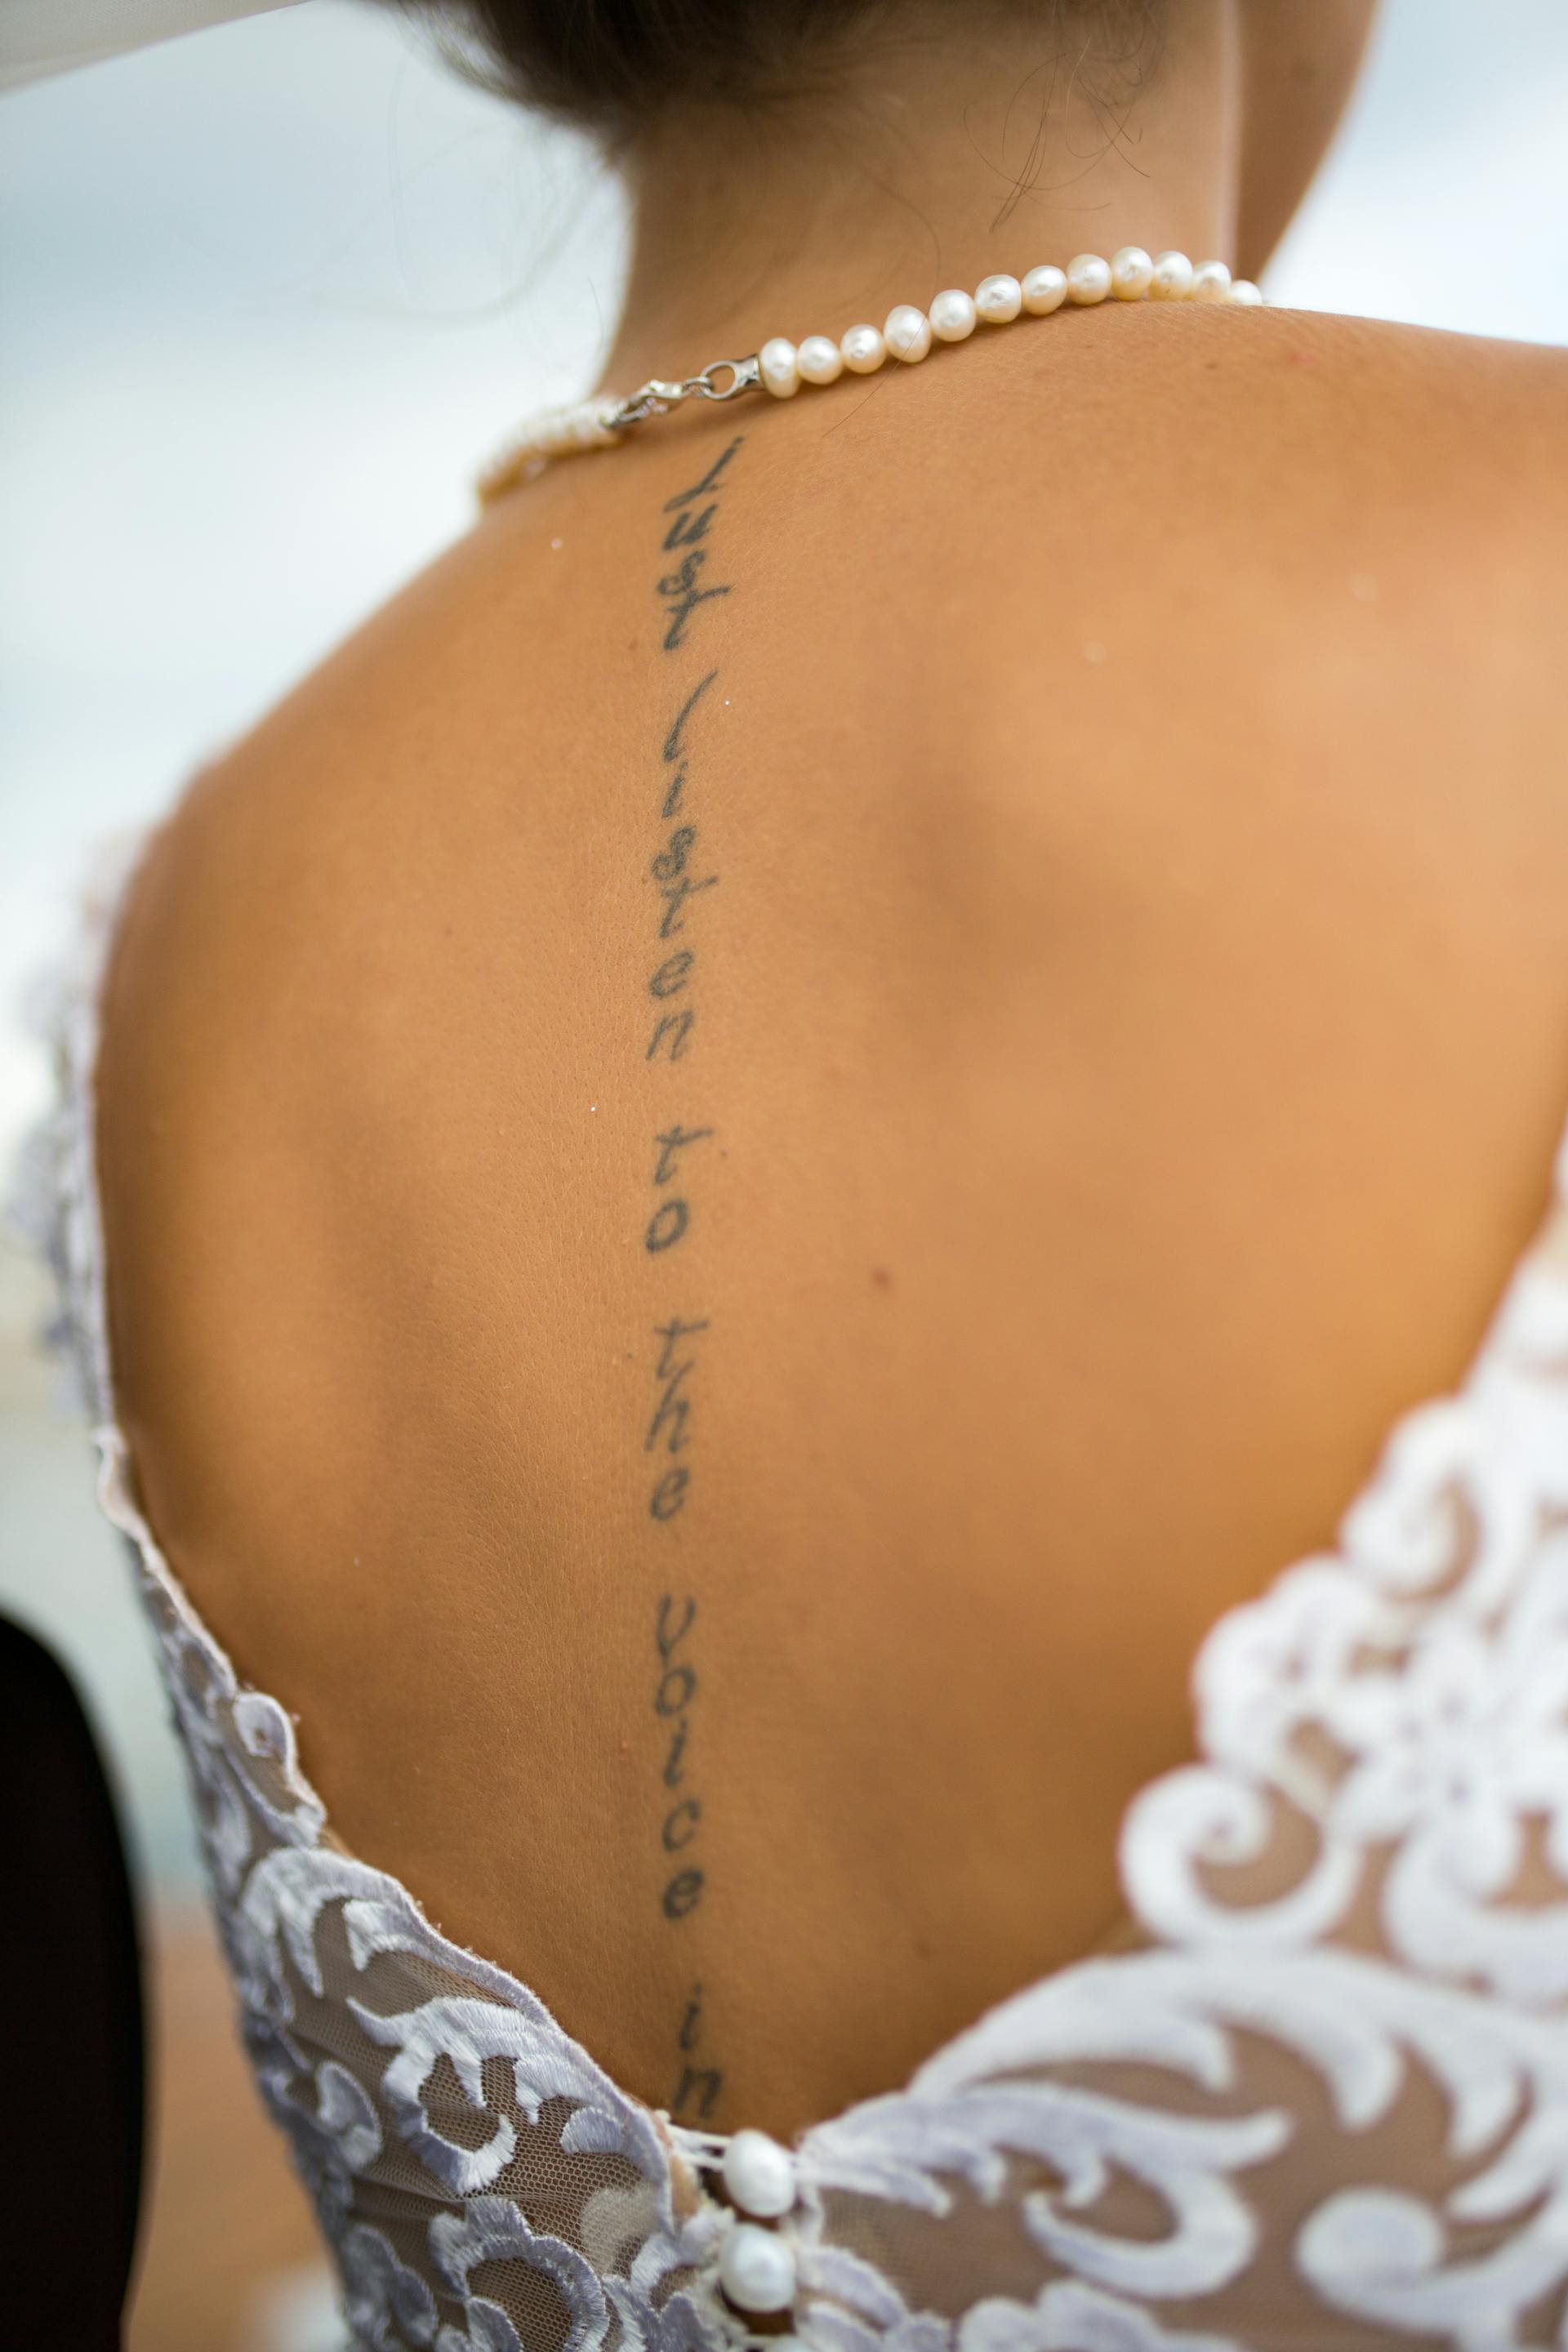 The back of a bride's wedding dress | Source: Pexels